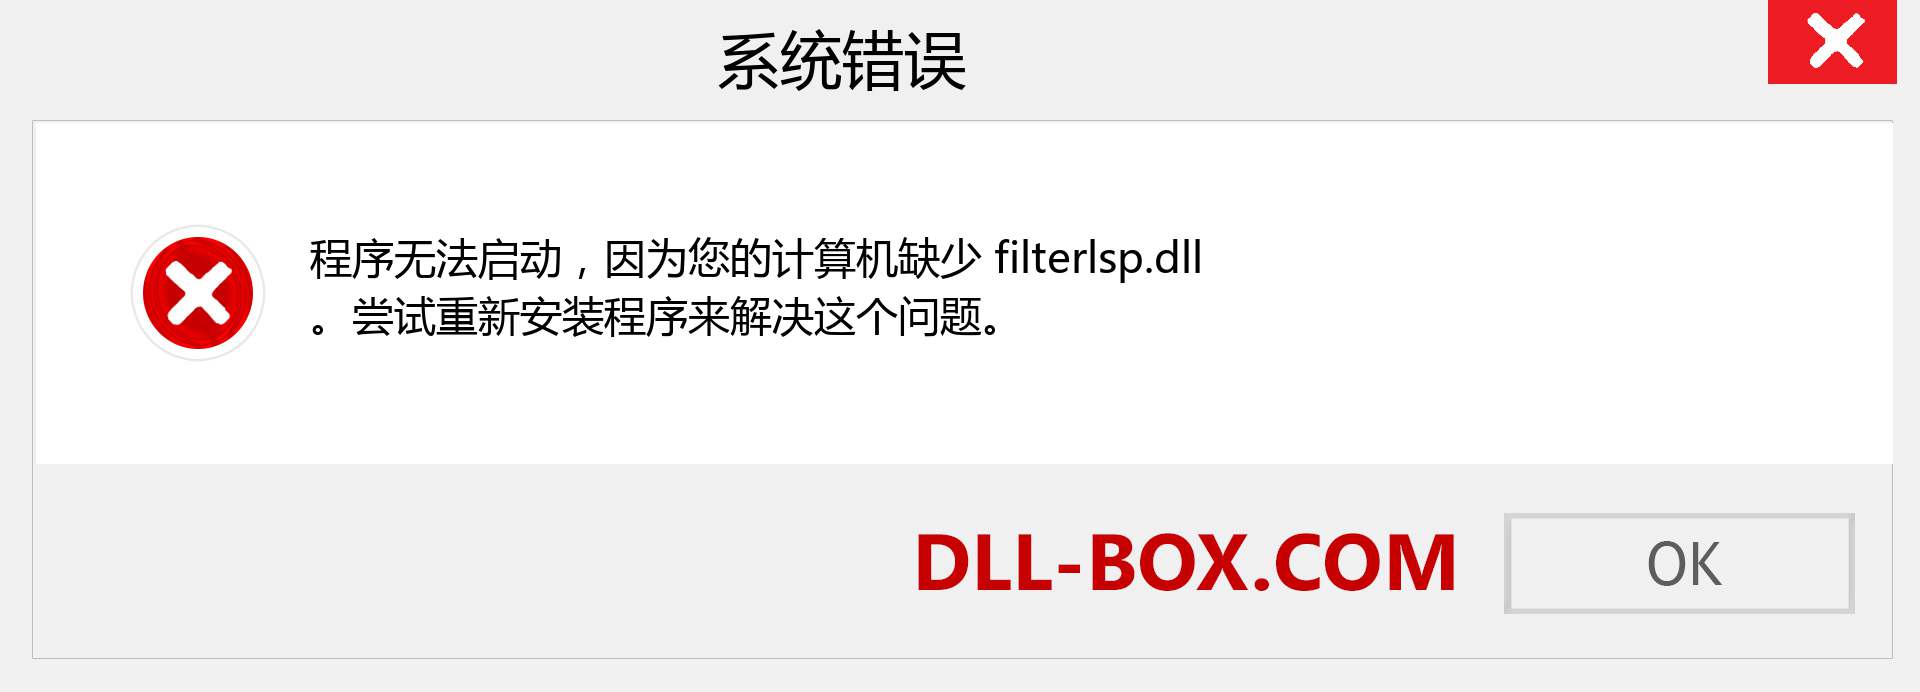 filterlsp.dll 文件丢失？。 适用于 Windows 7、8、10 的下载 - 修复 Windows、照片、图像上的 filterlsp dll 丢失错误